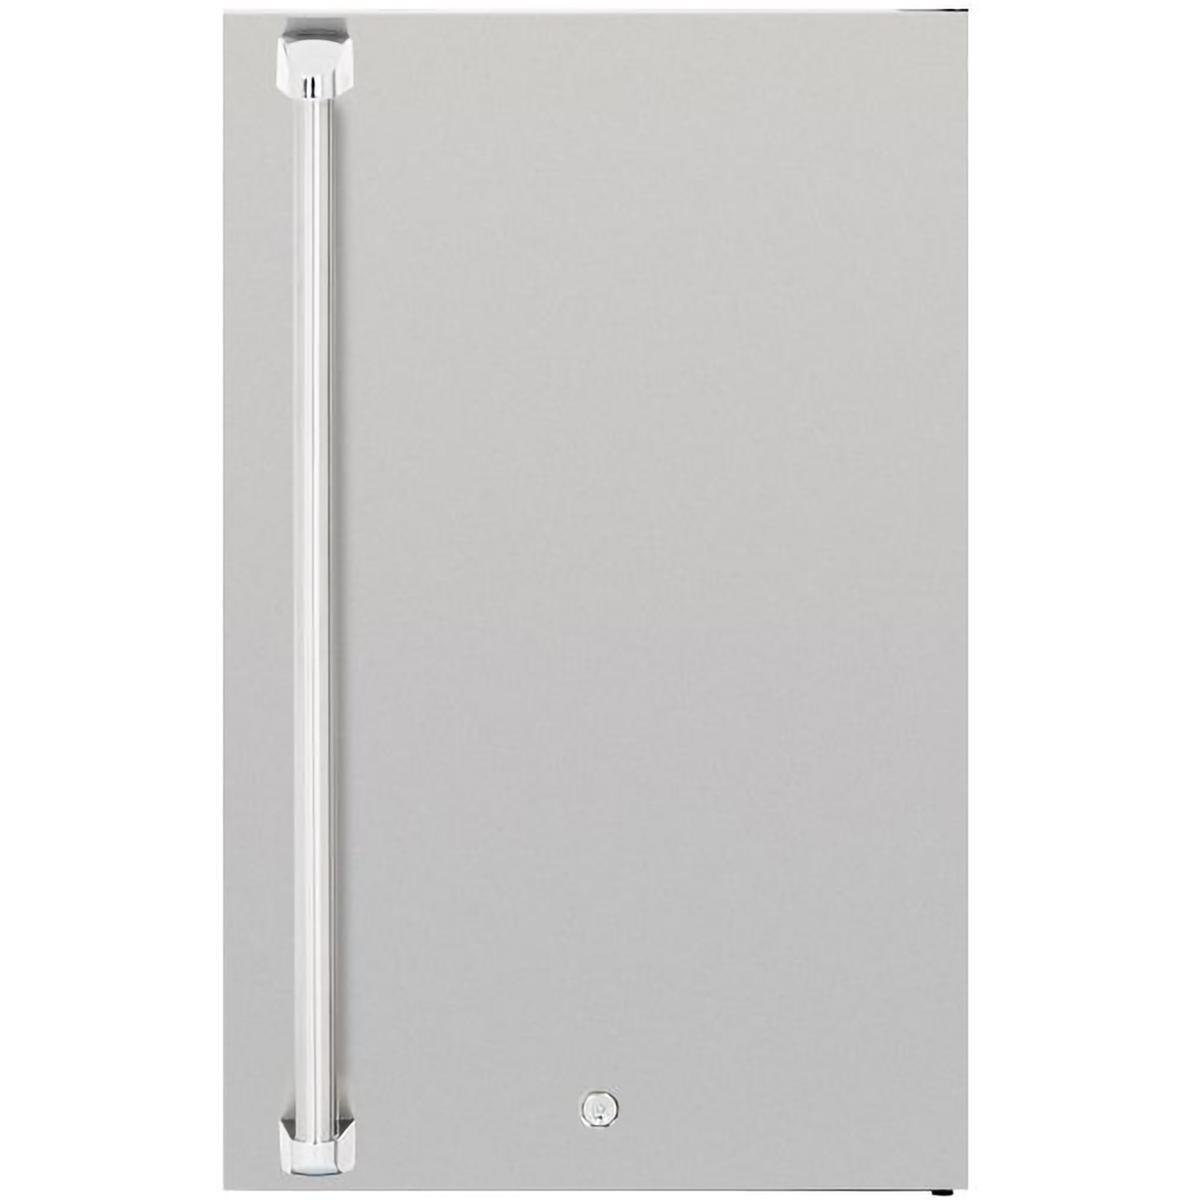 Summerset Grills Summerset Refrigeration Refrigerator Liner - Stainless Steel - Left-to-Right Opening